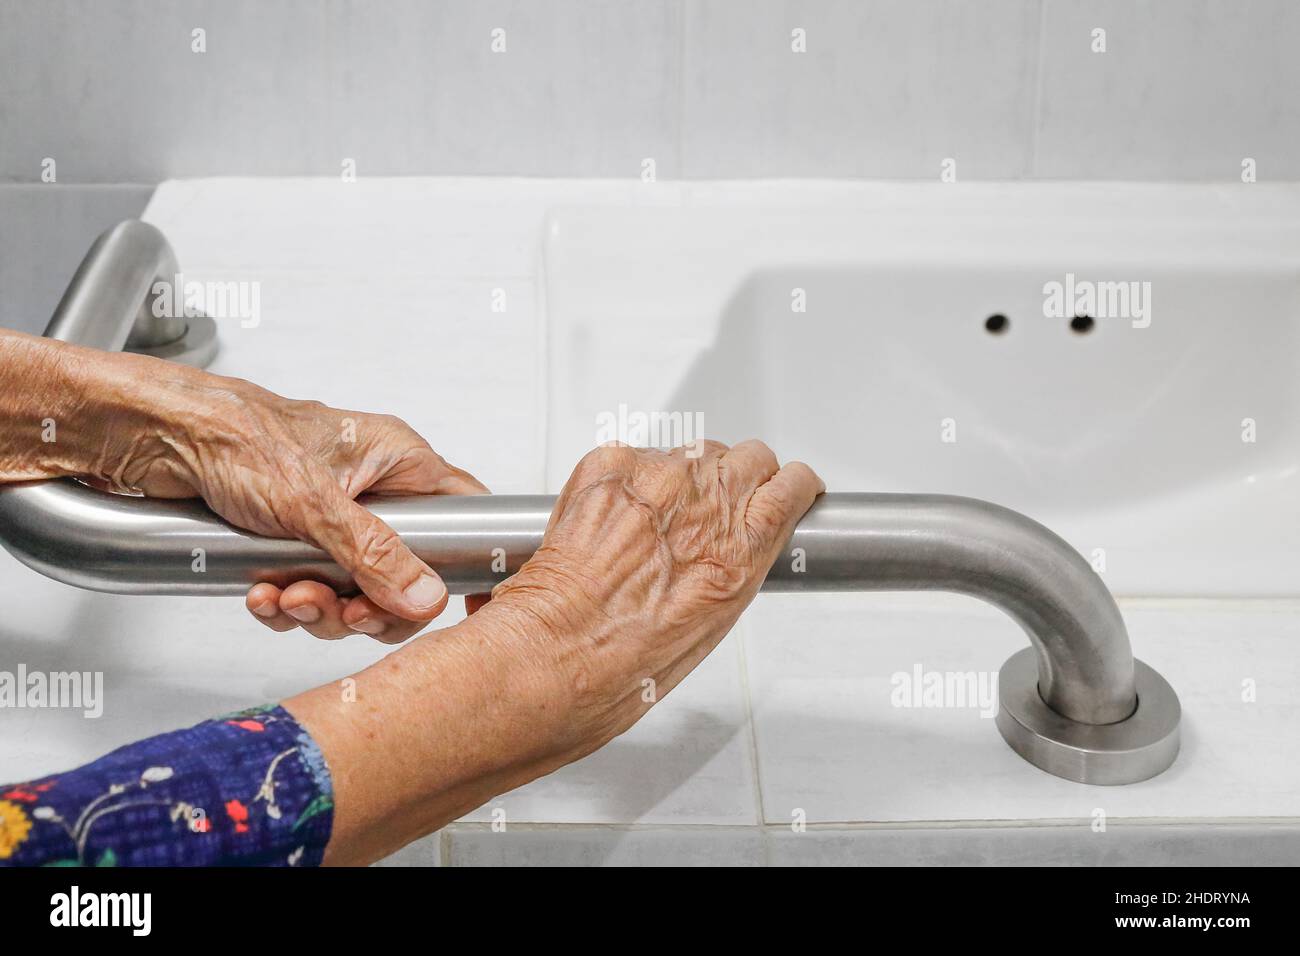 Ältere Frau, die im Badezimmer am Handlauf festhält Stockfotografie - Alamy